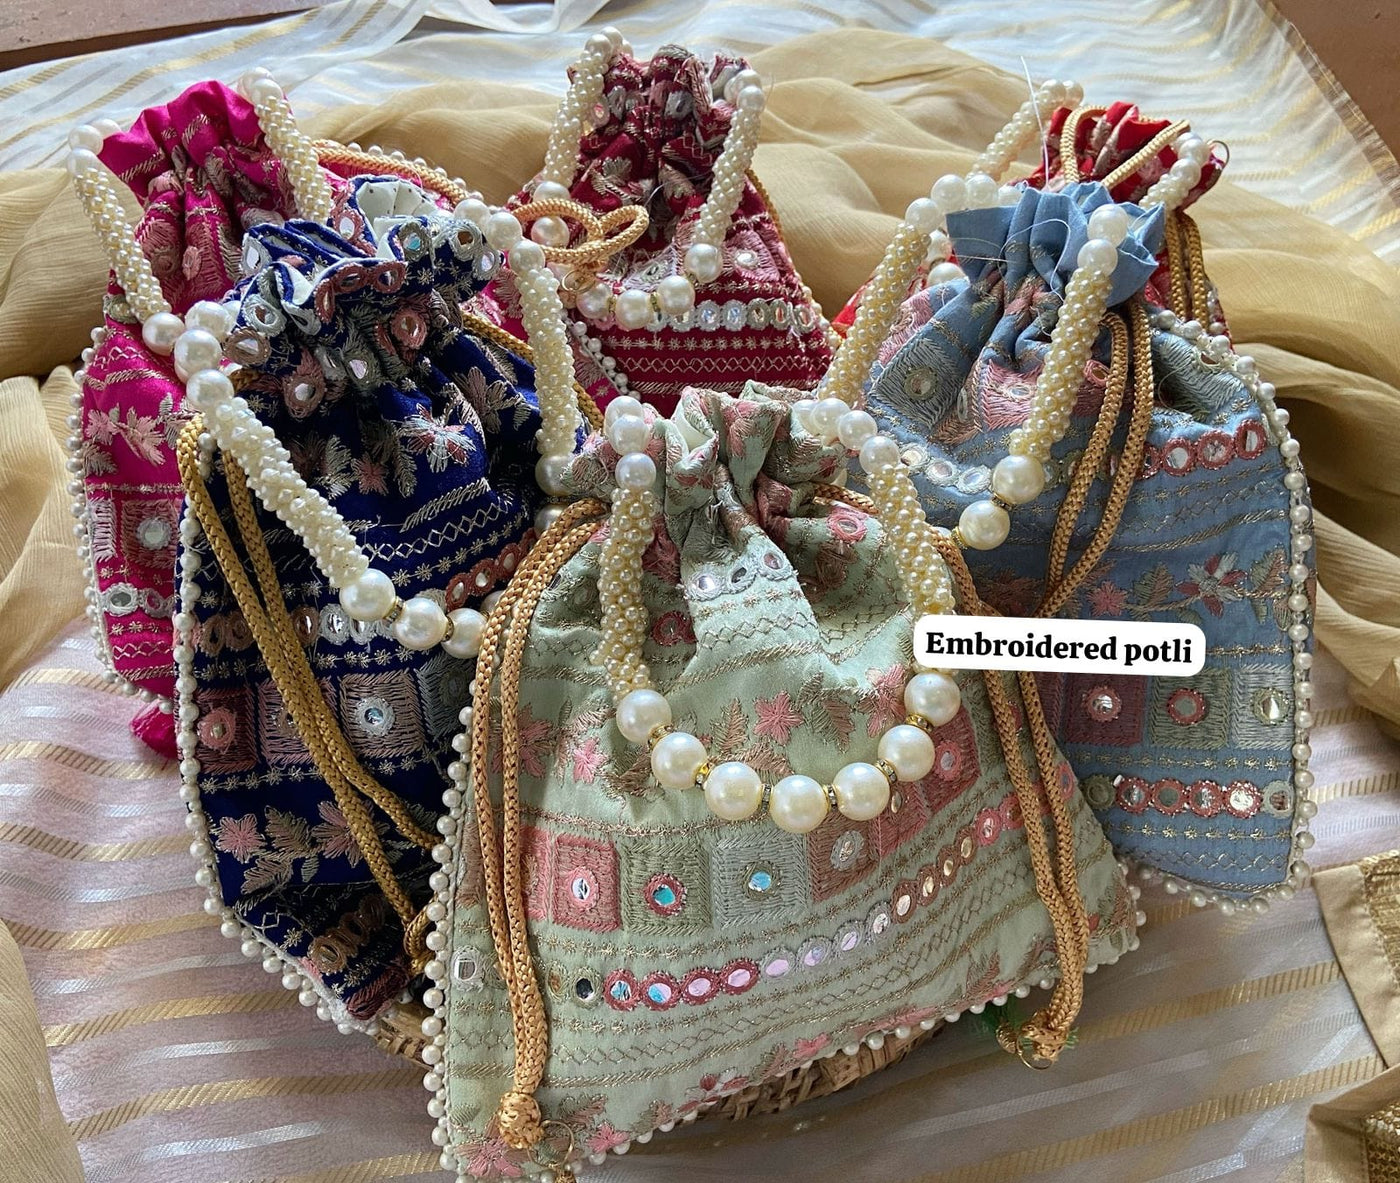 180 RS Per pc ON BUYING 🏷IN BULK Women's Potli Bag LAMANSH Designer Potli bags for wedding return gifts 🎁 / Beautiful Embroidered Potli gift bags for haldi mehendi sangeet favors for bridesmaids